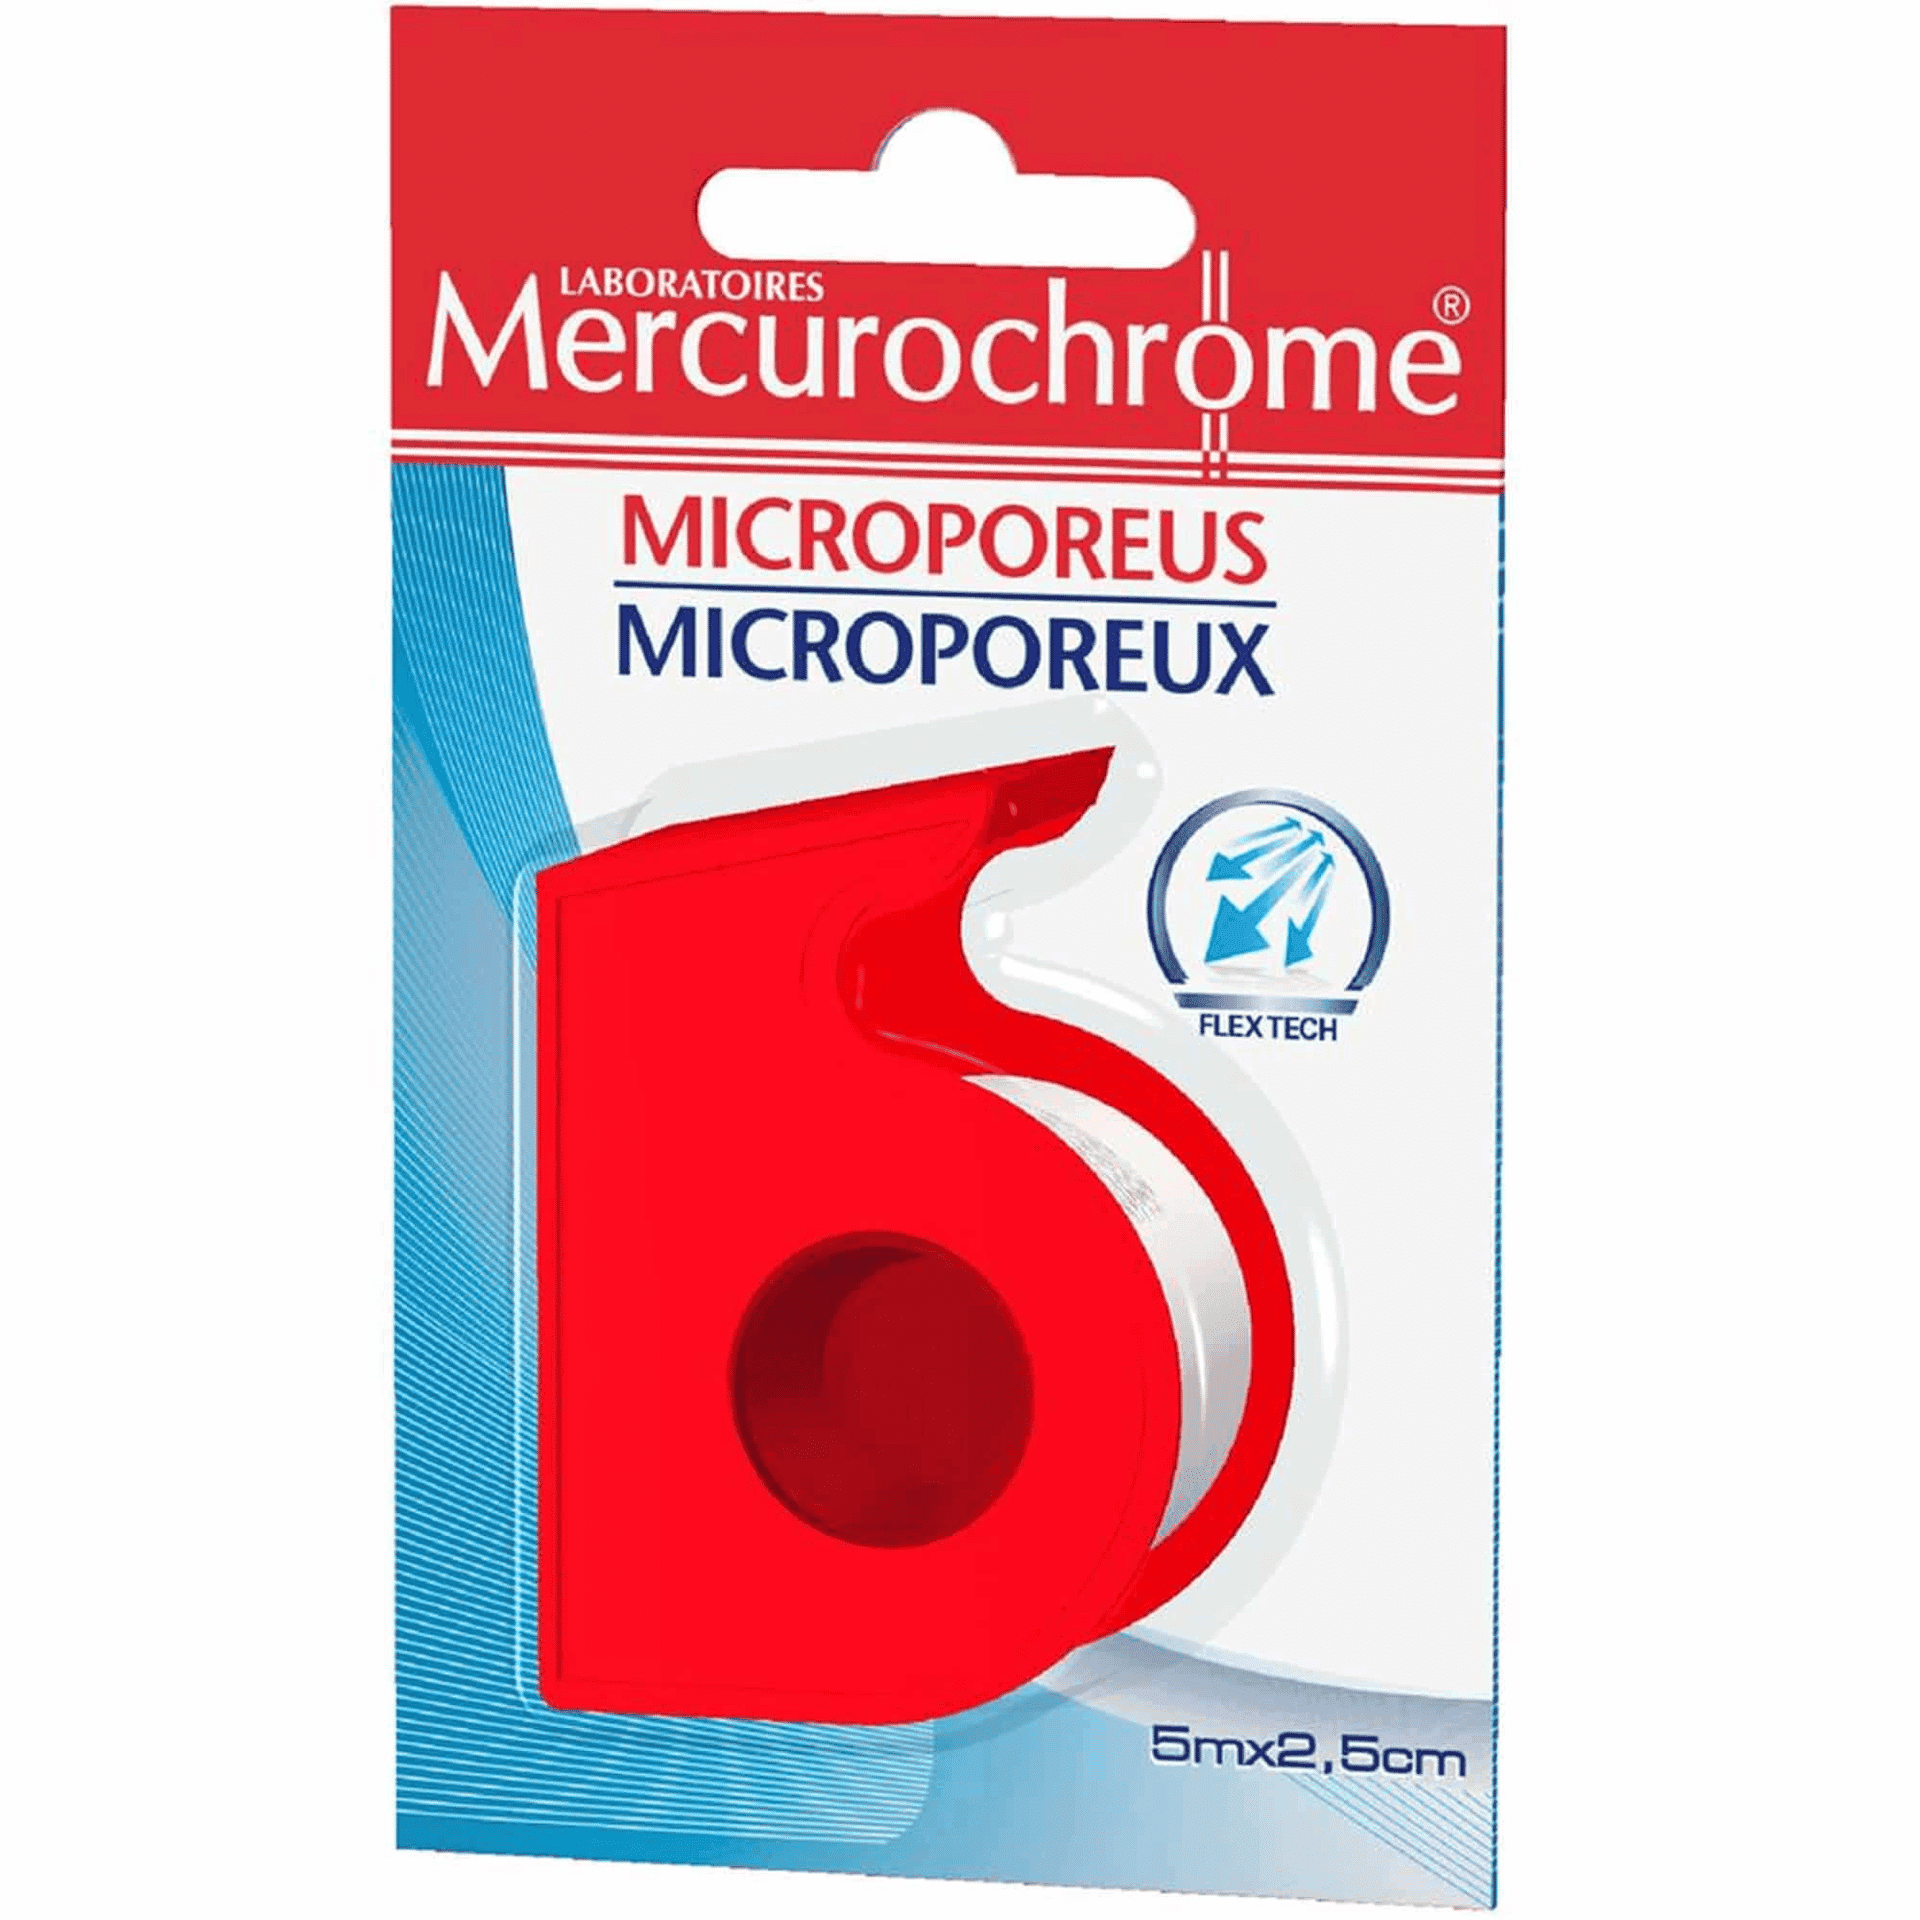 Mercurochrome Pleister Microporeus 5 m x 2,5 cm 1 stuk